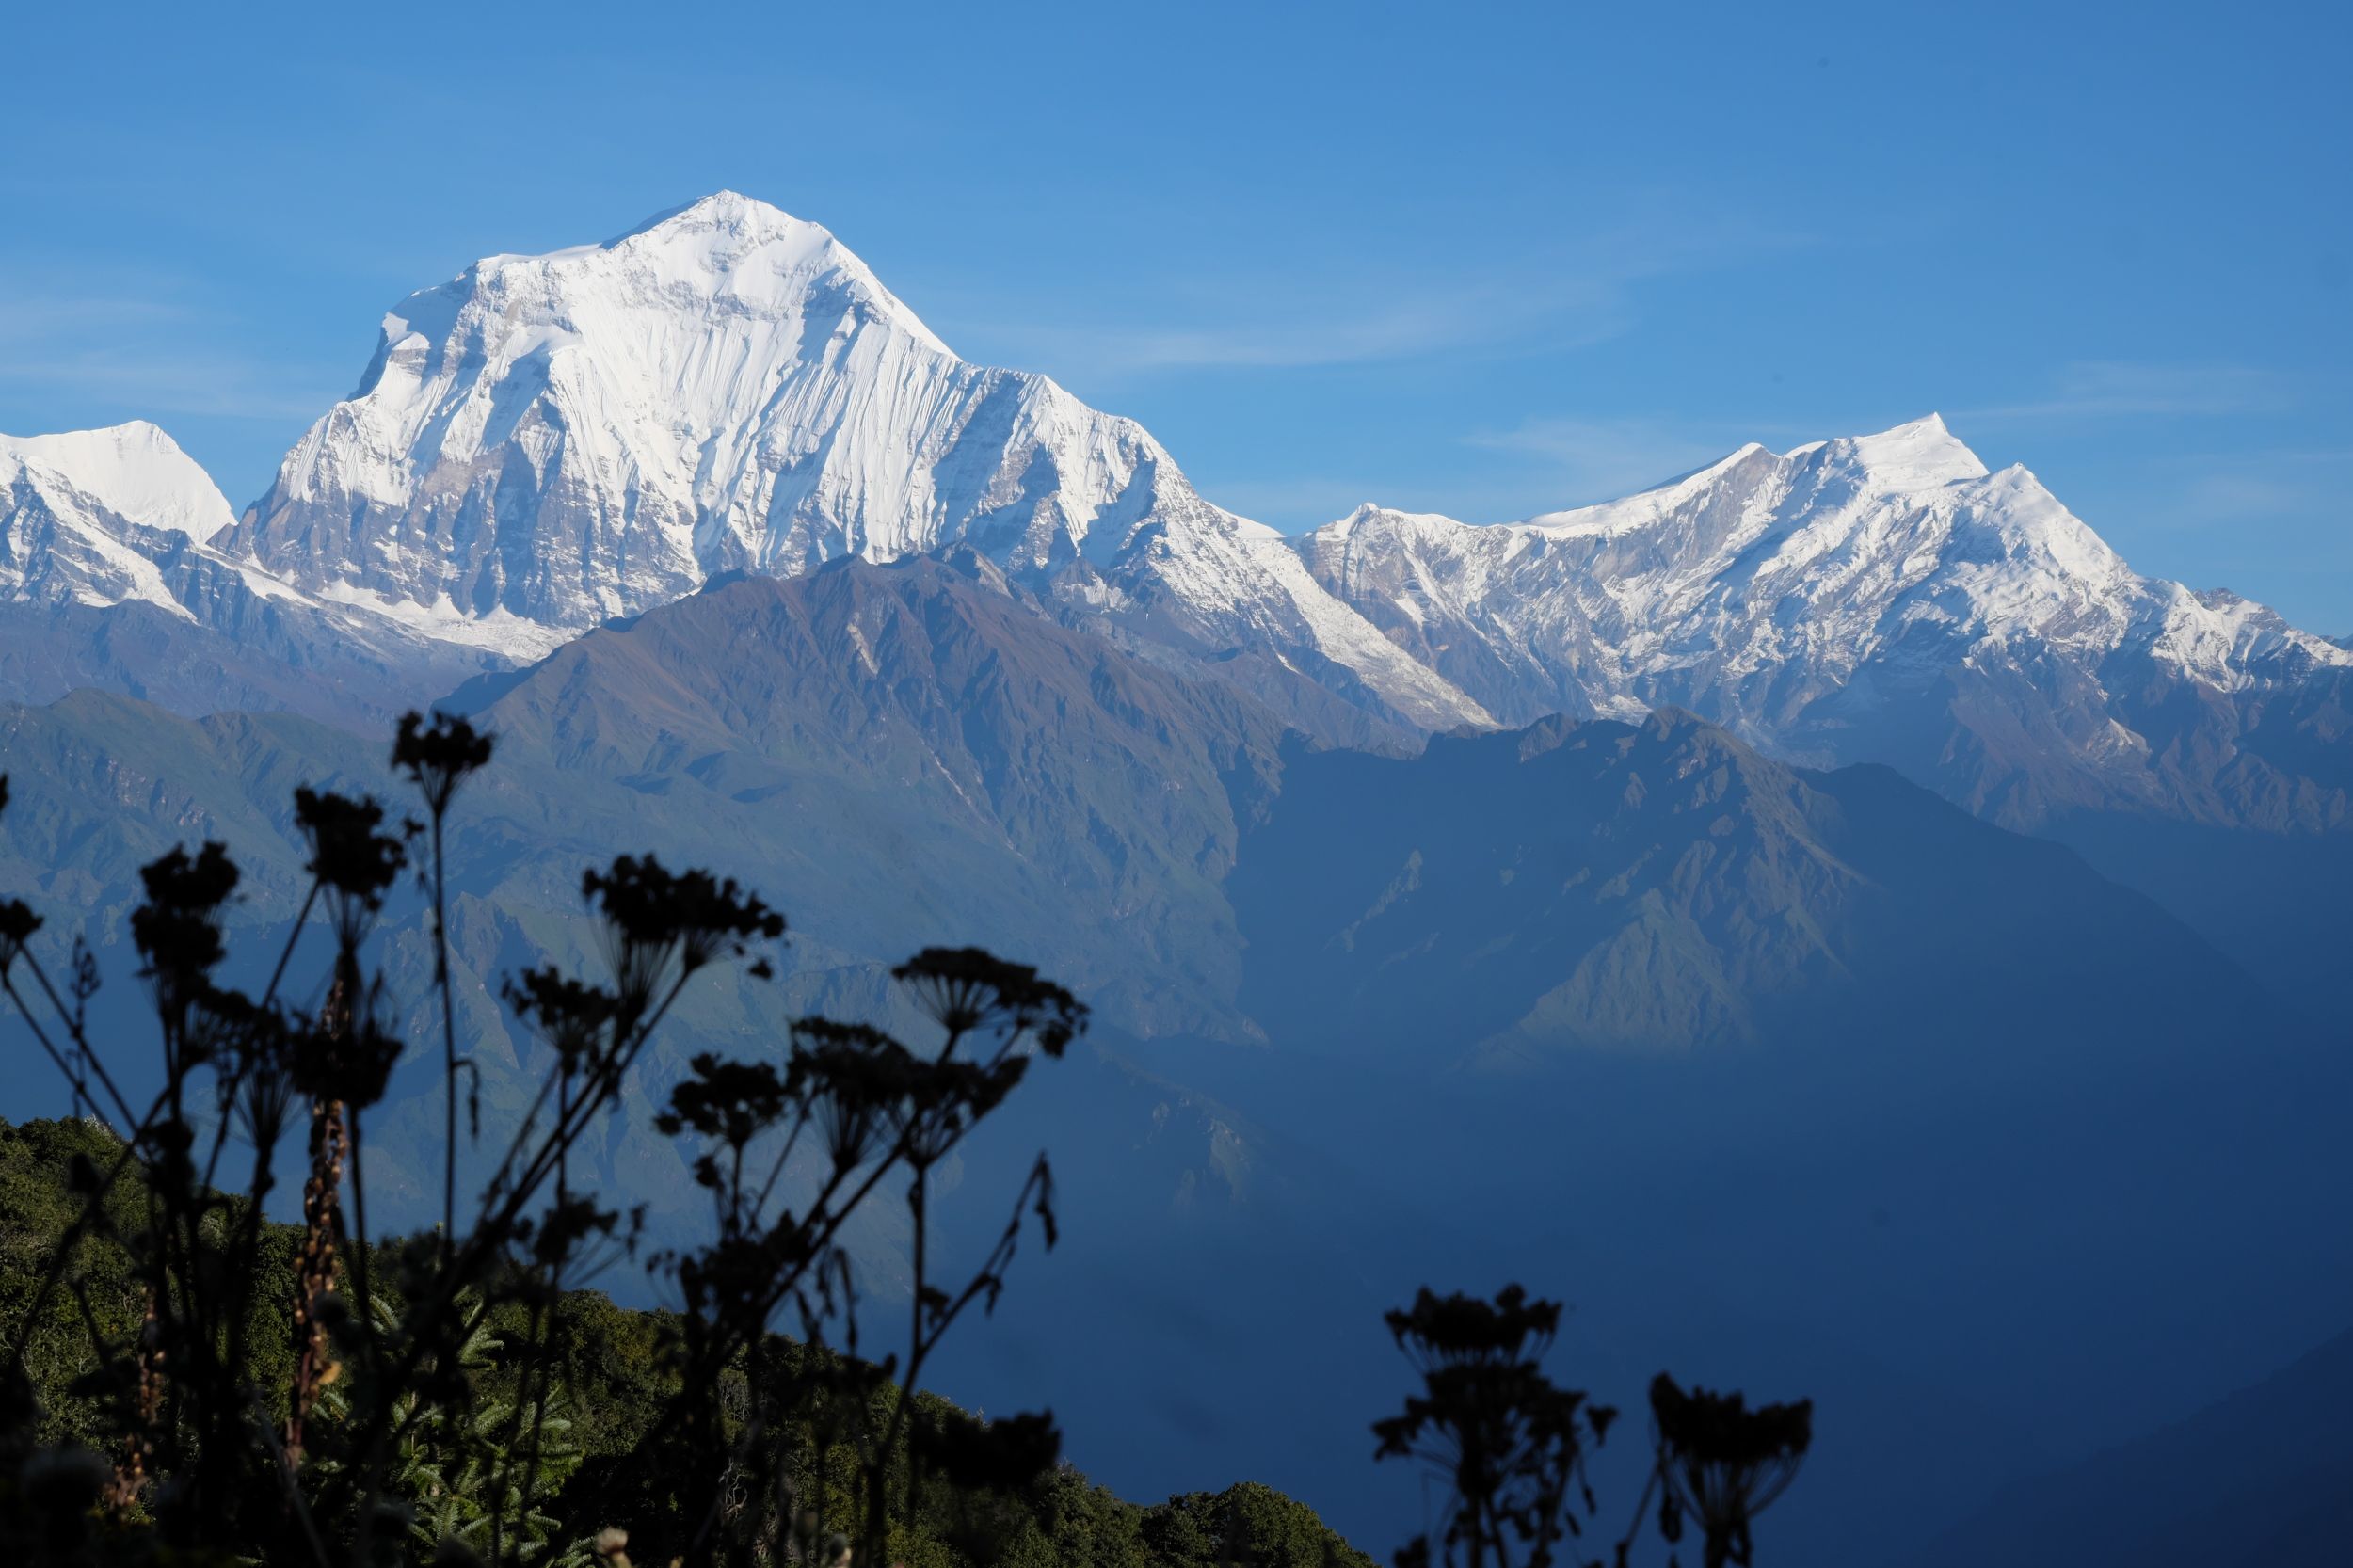 dhaulagiri, mountains, dawn, nepal, дхаулагири, рассвет, горы, непал, Serg Pechenizhskiy